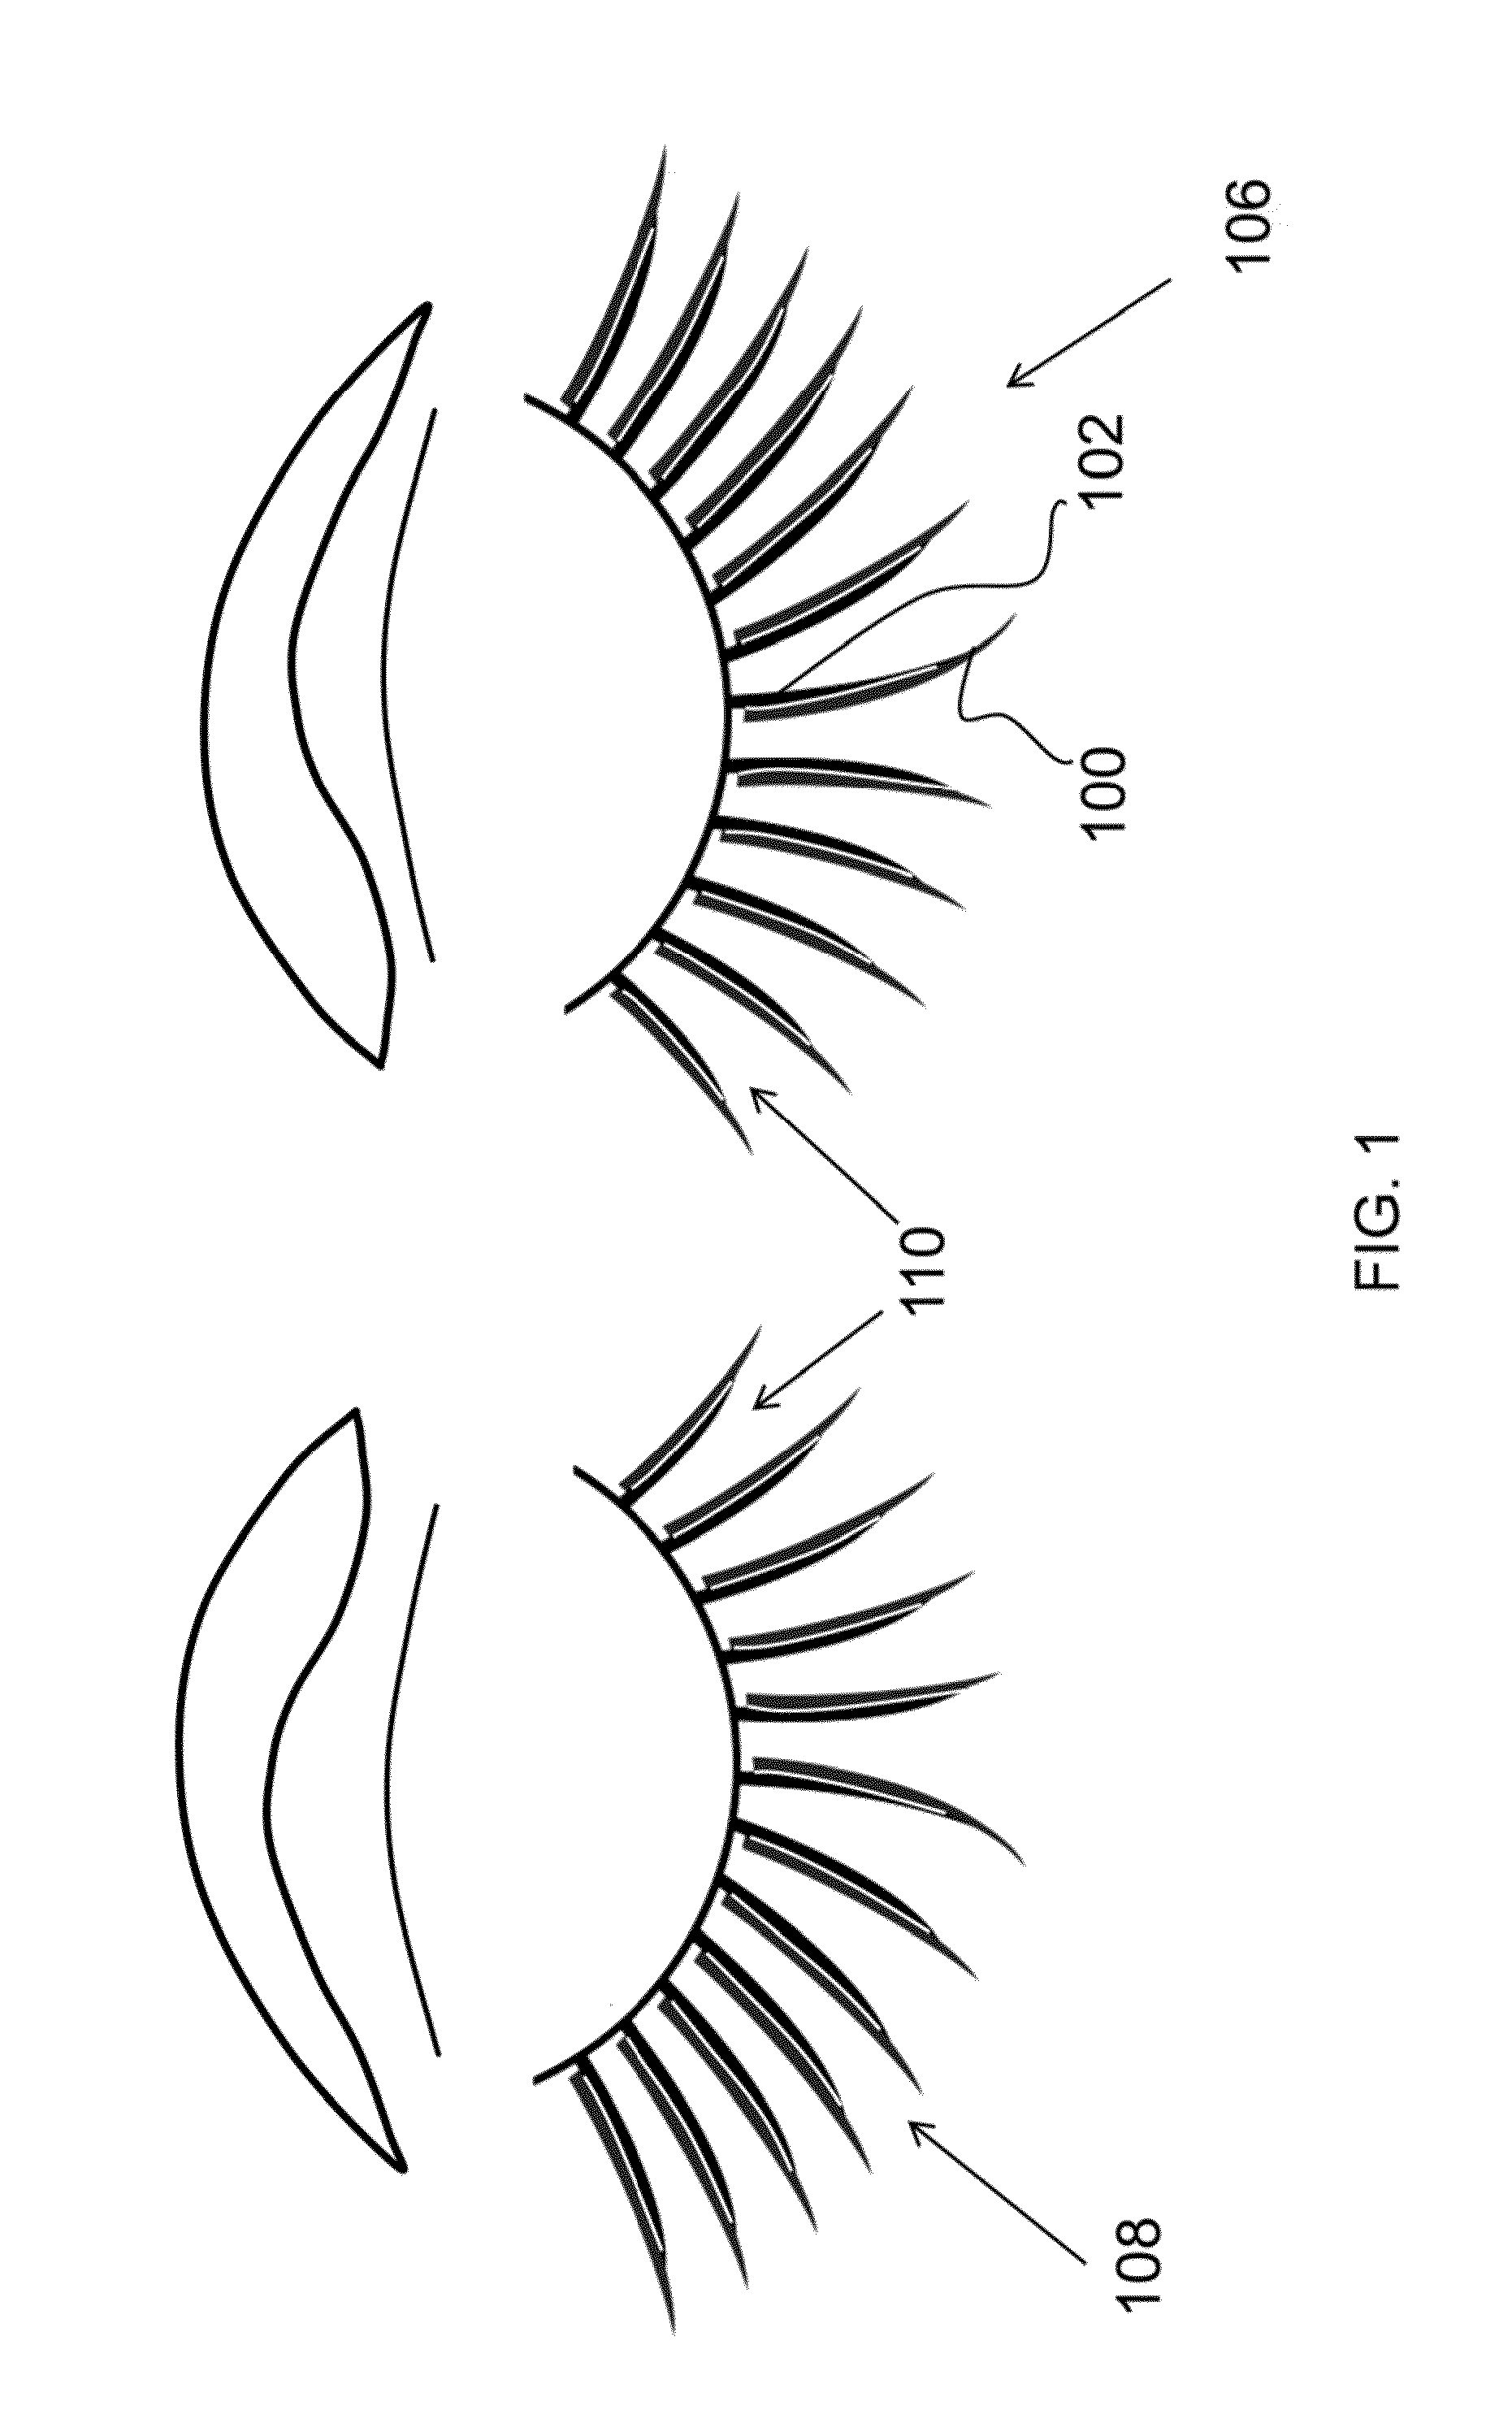 Method for grouping eyelashes and applying eyelash extensions